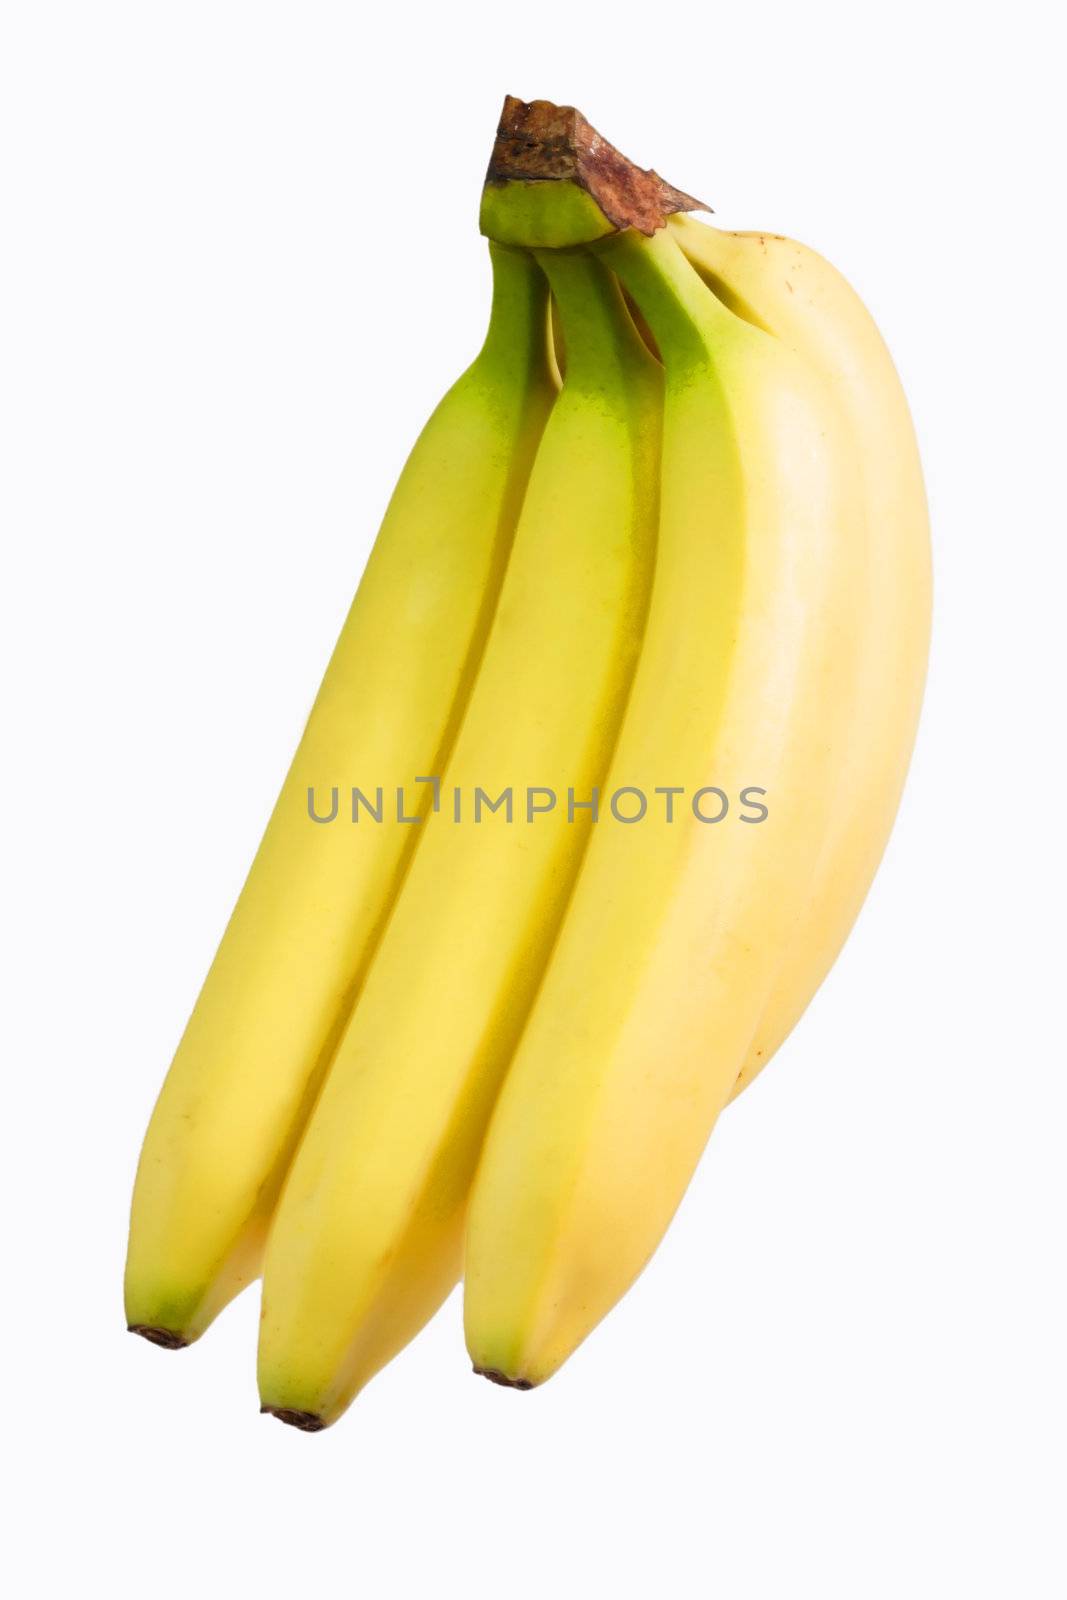 Bananas by Teamarbeit